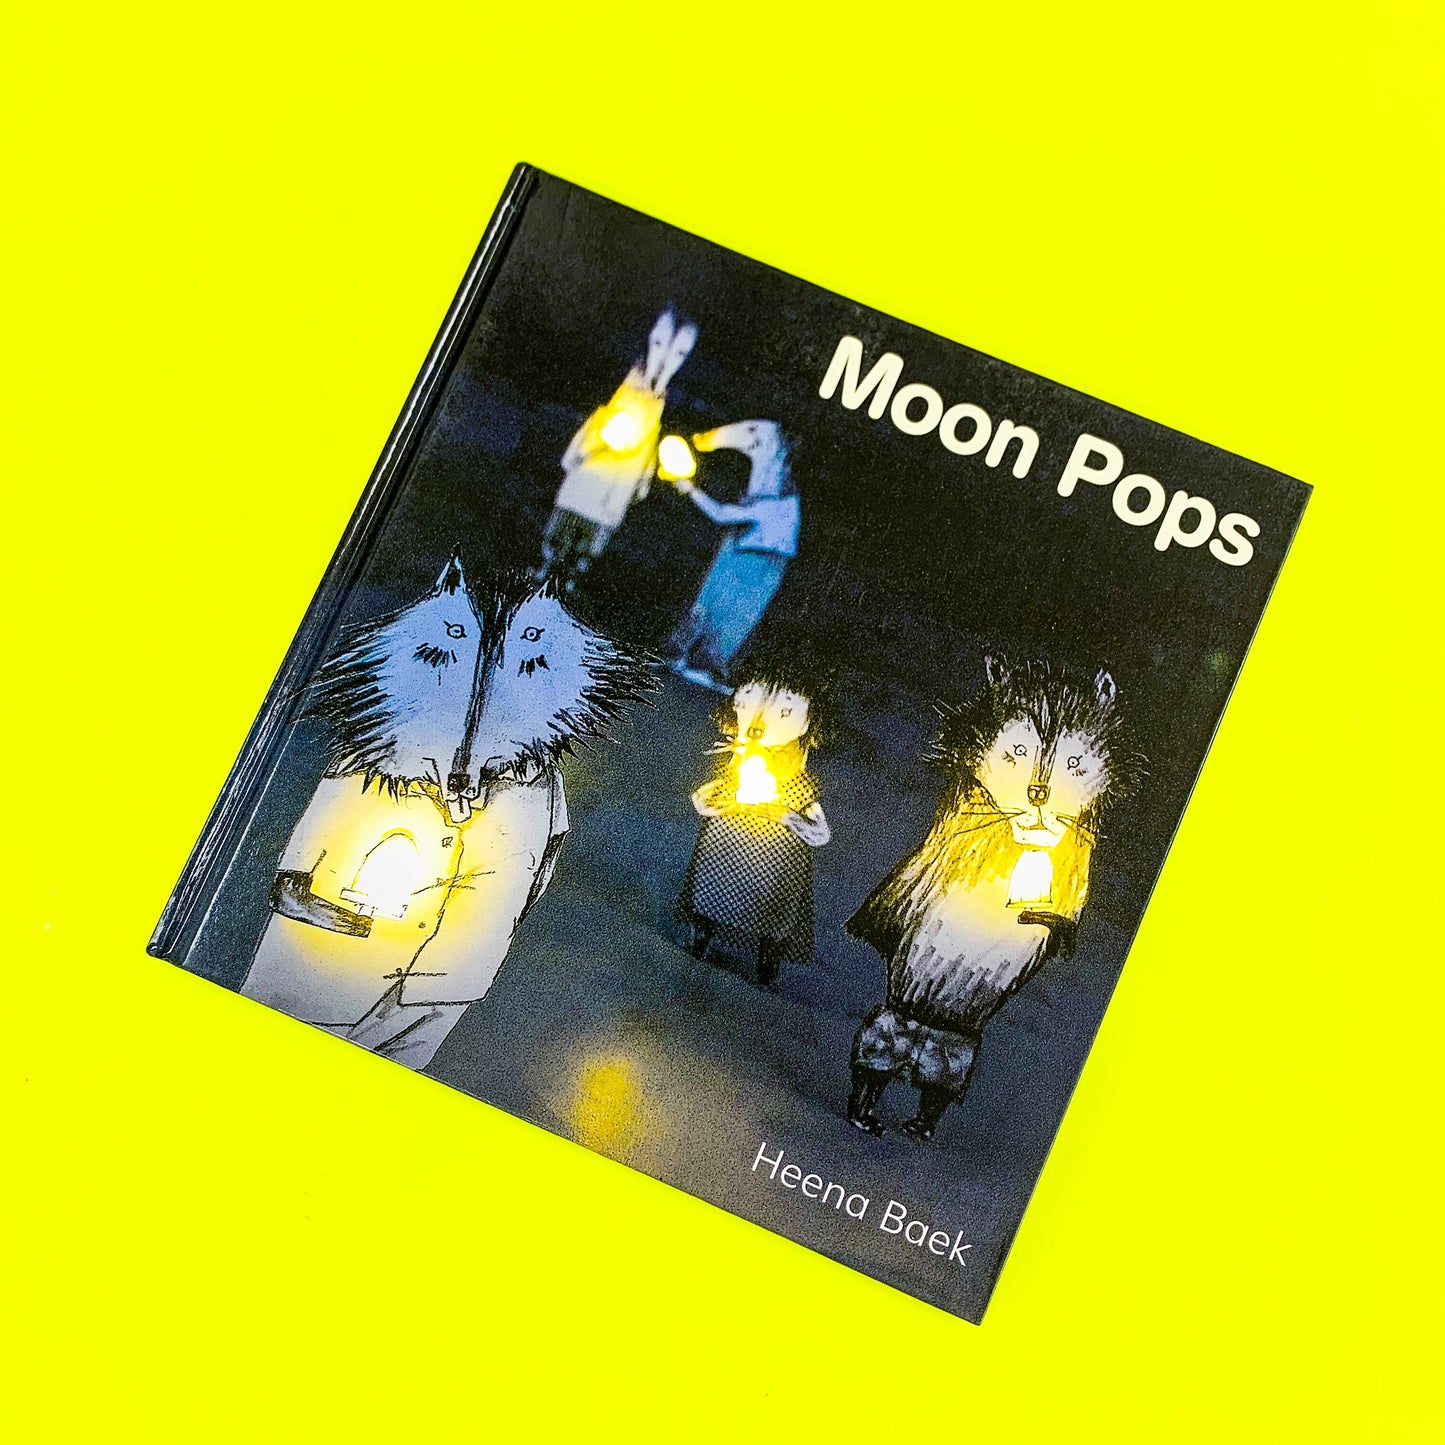 Moon Pops